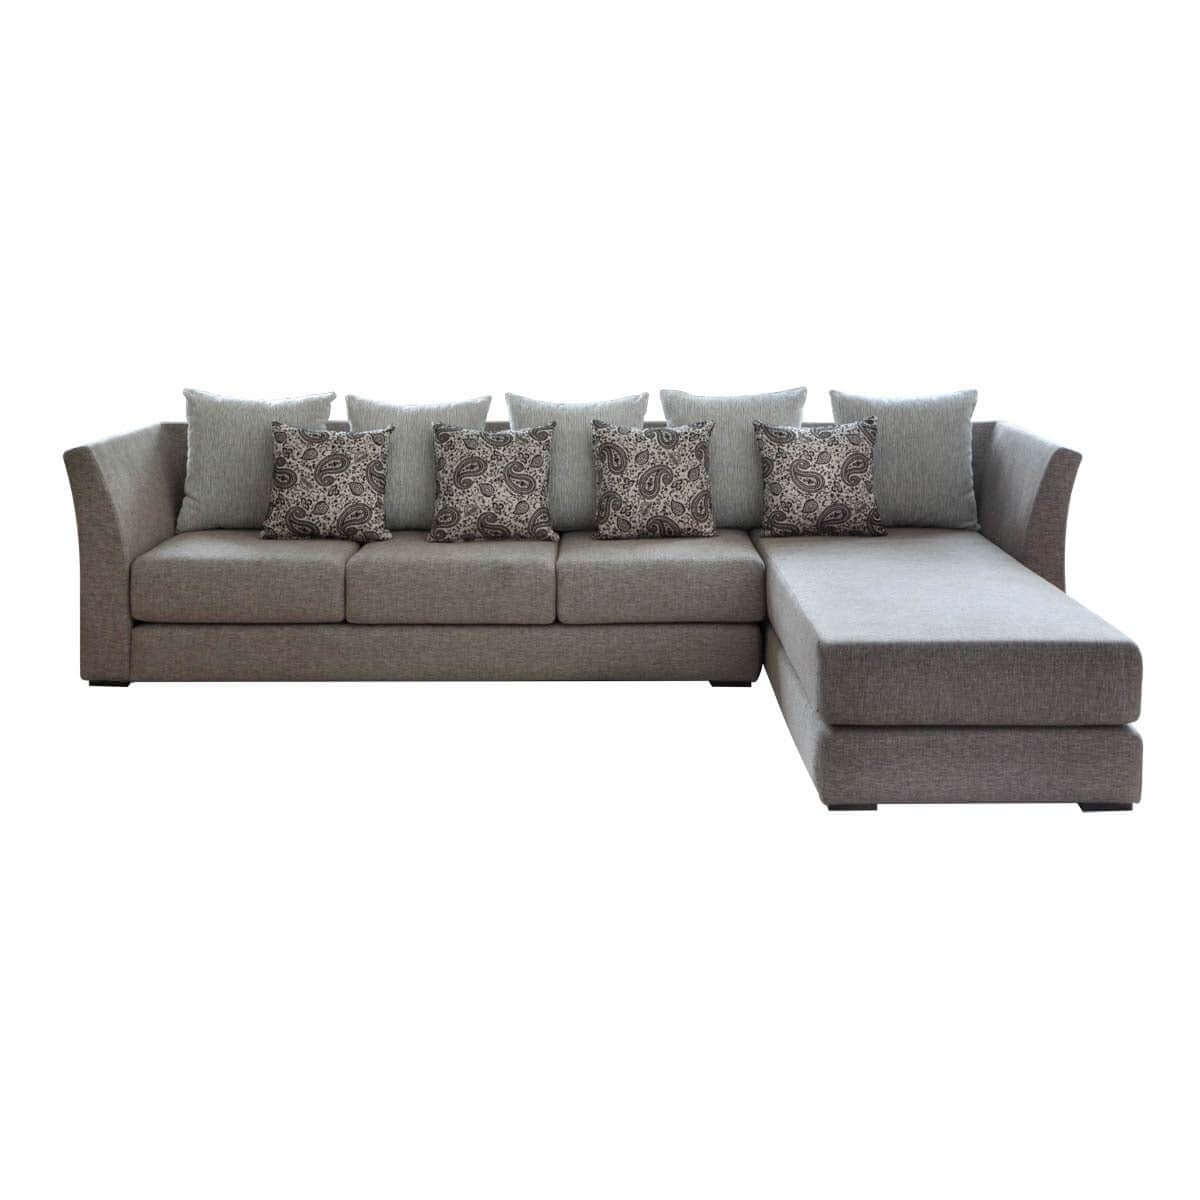 nara l-shape three seat elegant and simple sofa